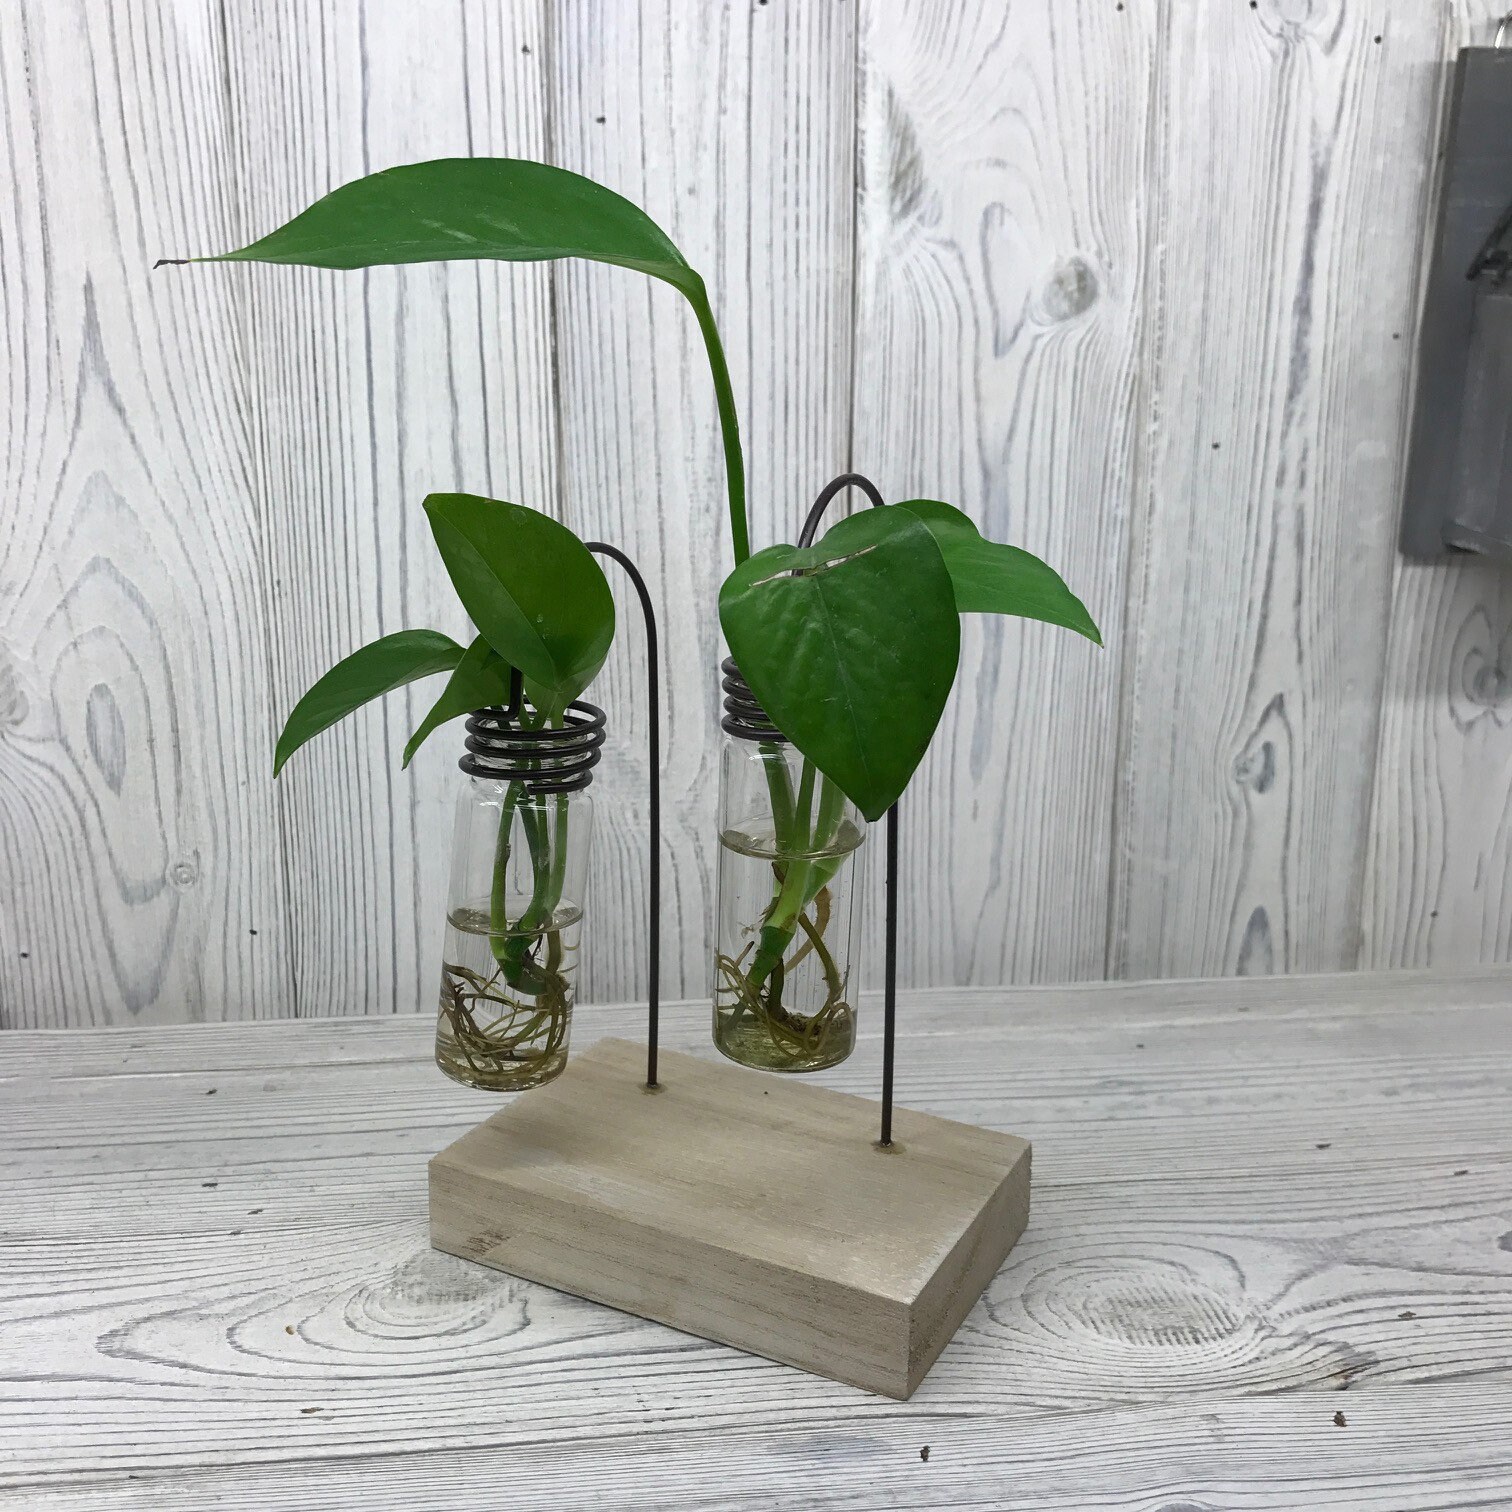 Bird Vase Hydroponic Plant Holder Flower Pot for Cafe Shop Home Office Decor 